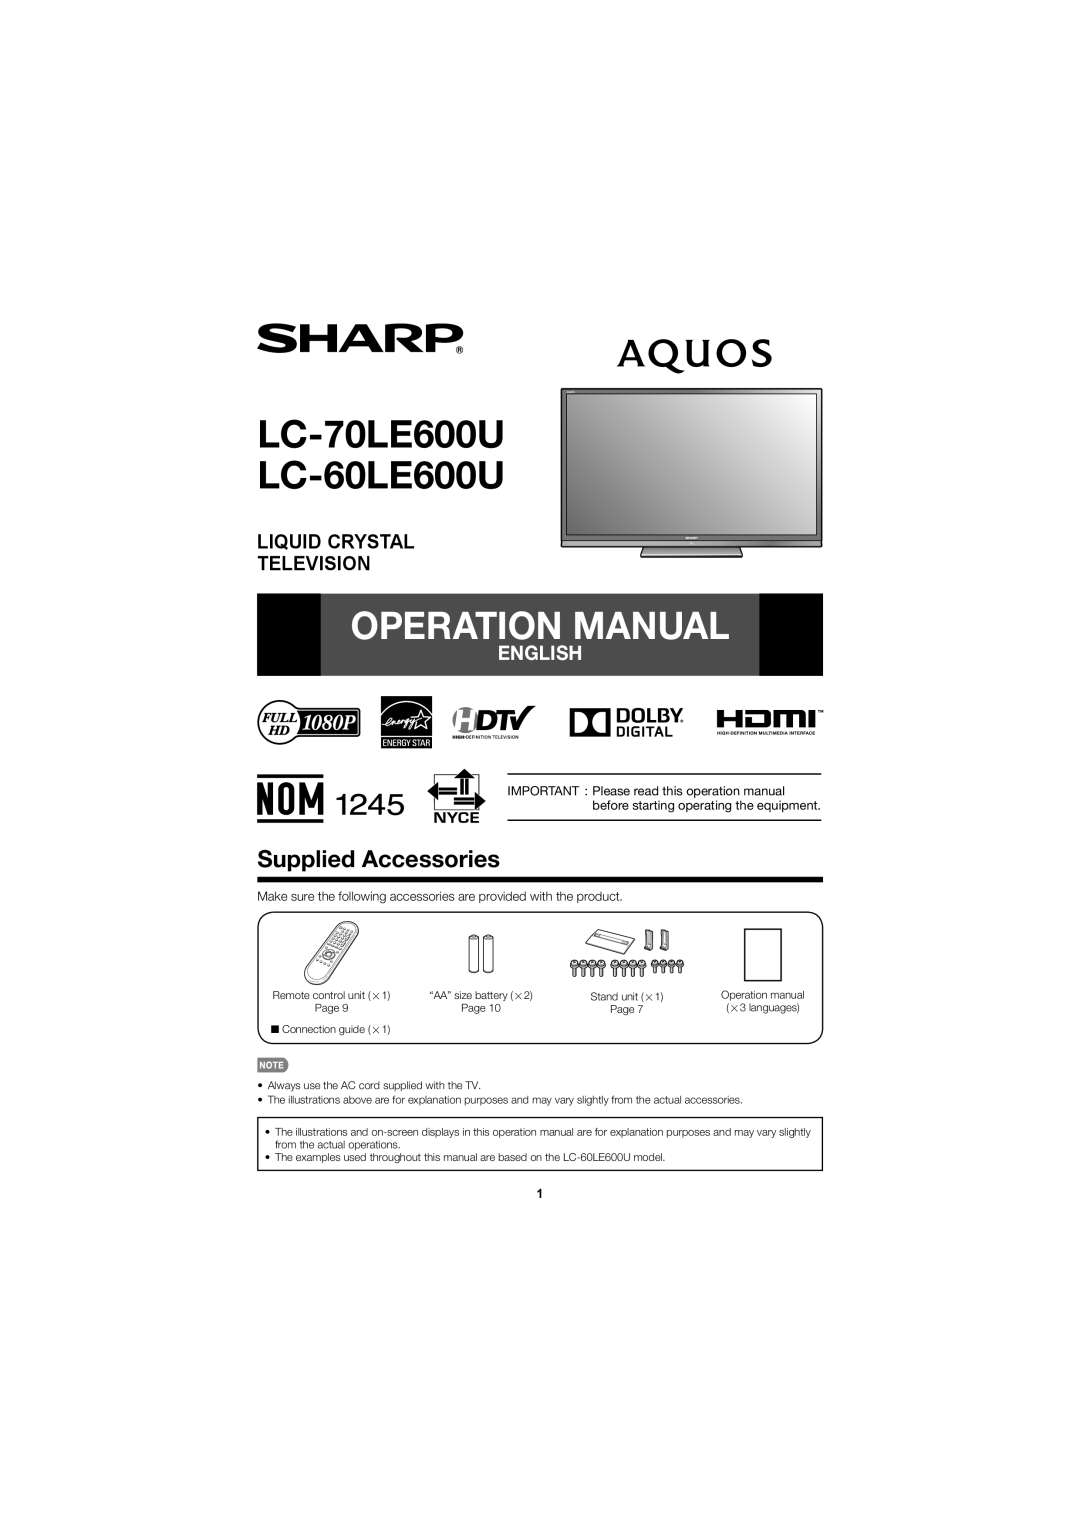 Sharp operation manual LC-70LE600U LC-60LE600U, Supplied Accessories, Operation Manual, Liquid Crystal Television 